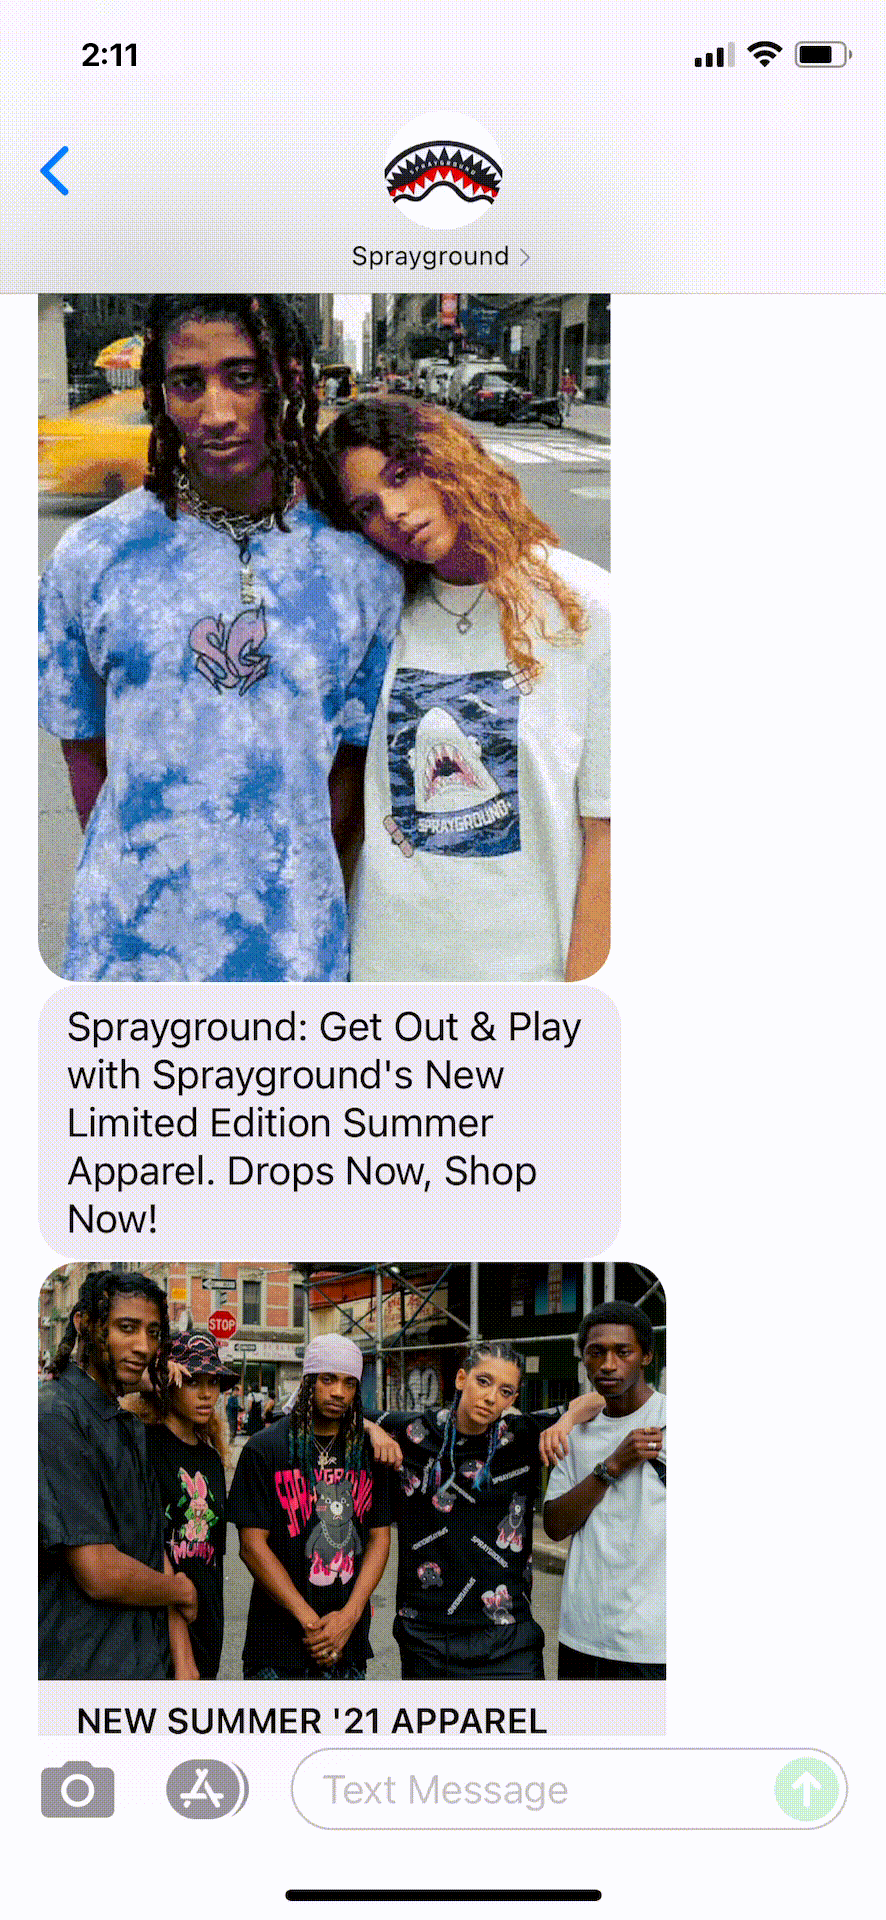 Sprayground-Text-Message-Marketing-Example-06.21.2021